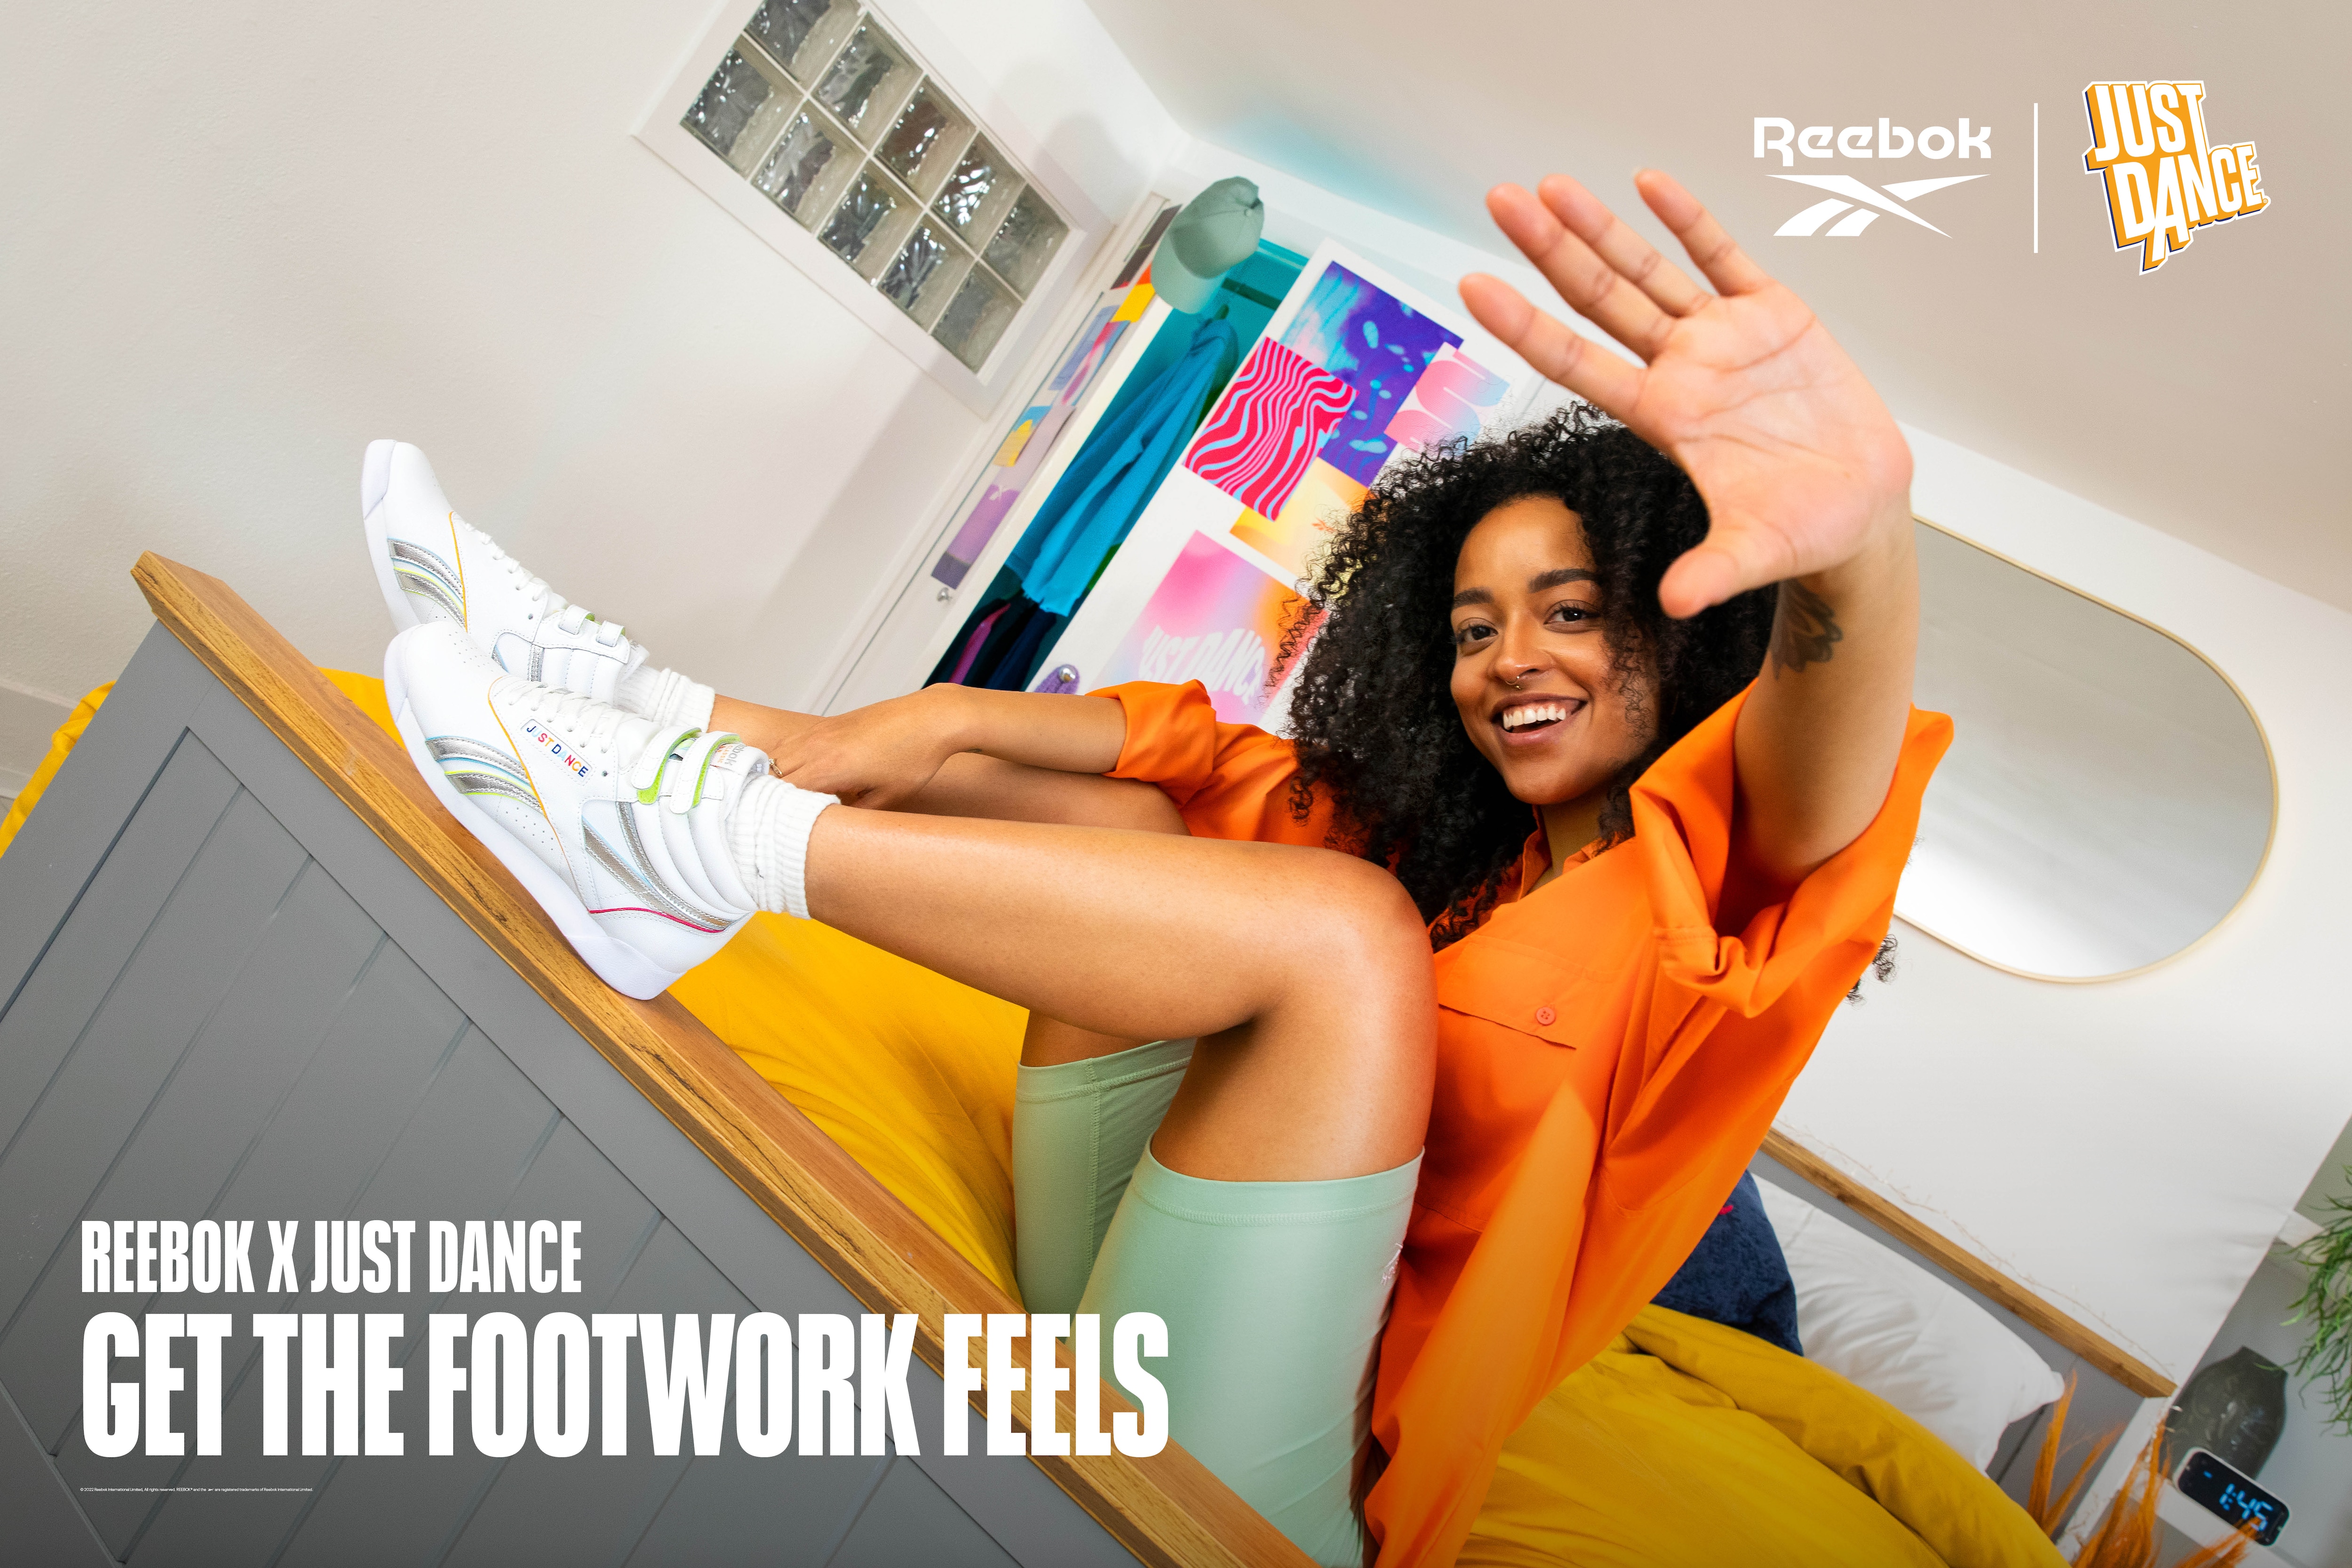 [Ubisoft News] [JD22] Reebok x Just Dance Footwear Collection - Freestyle